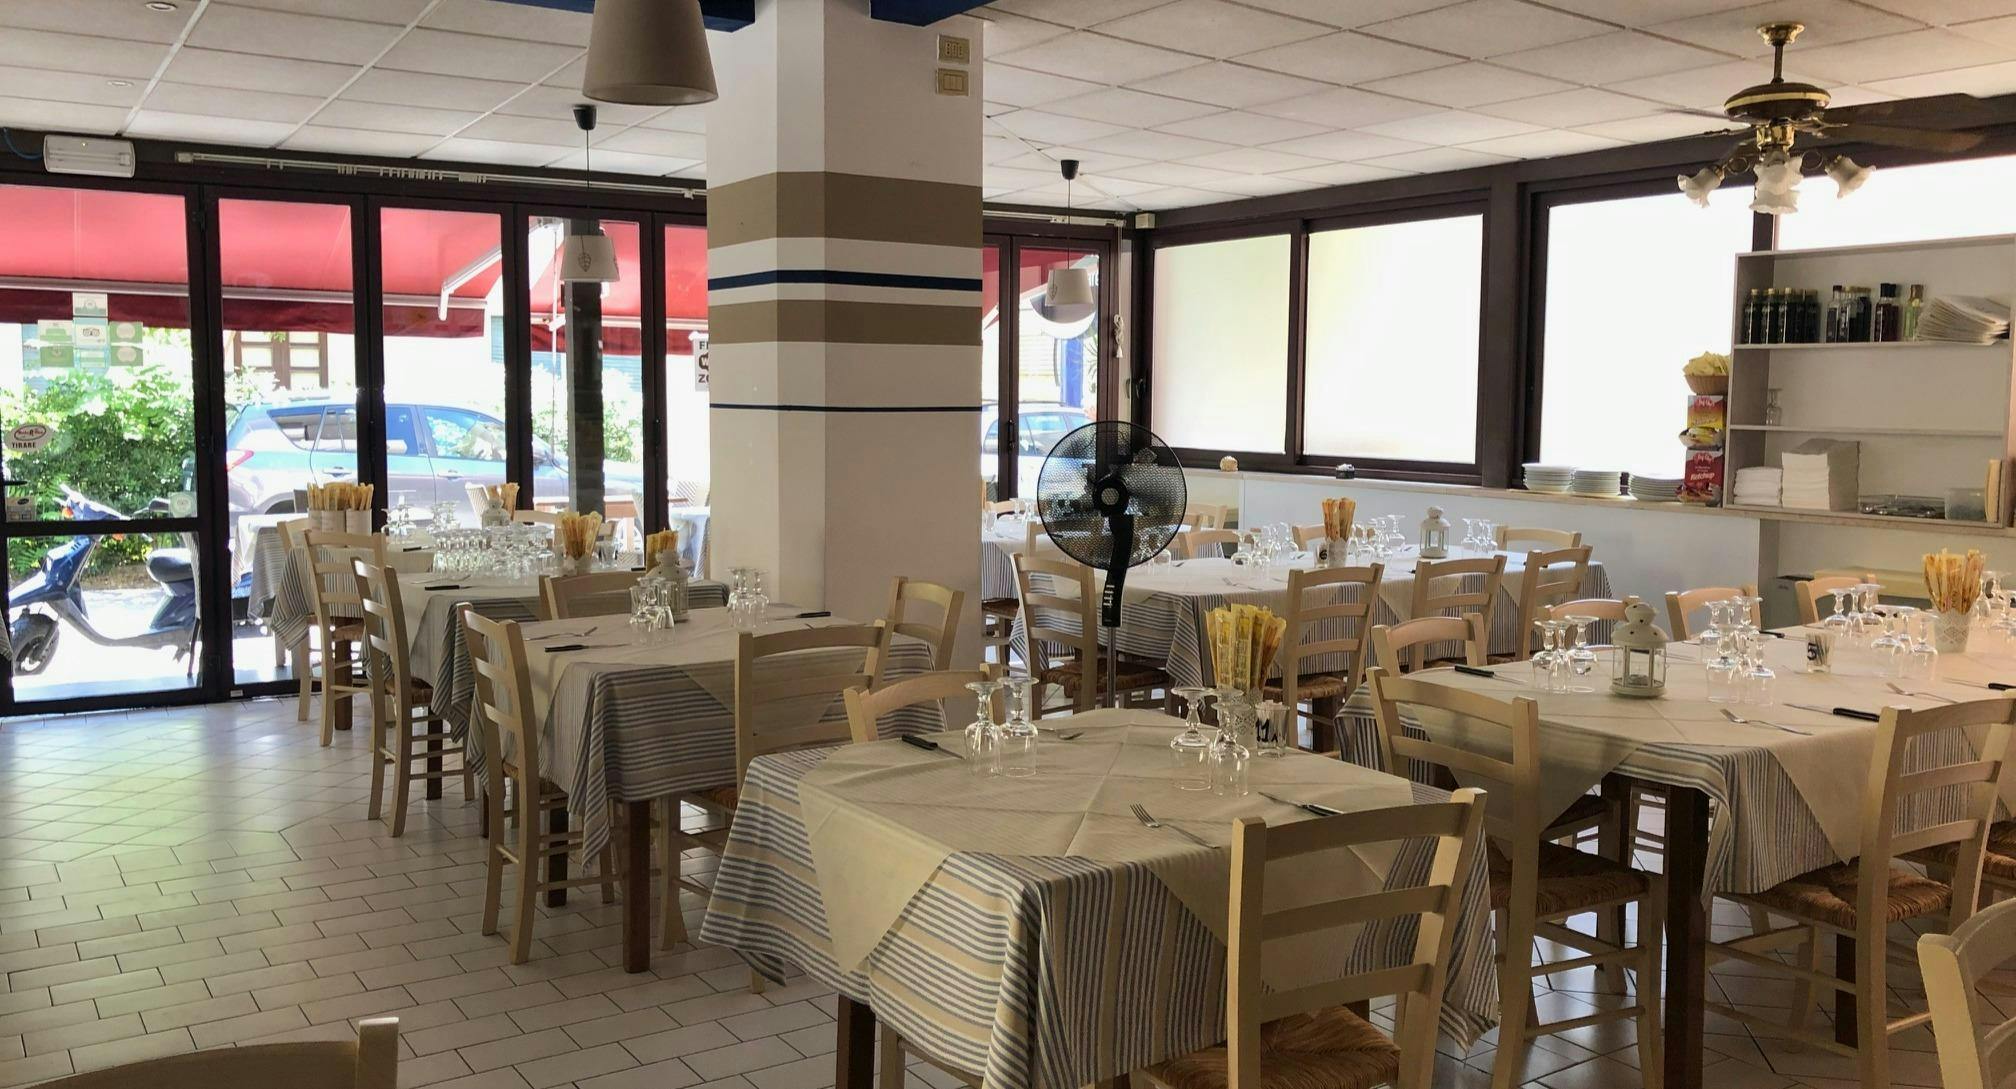 Photo of restaurant Piccadilly Mare in Cattolica, Rimini